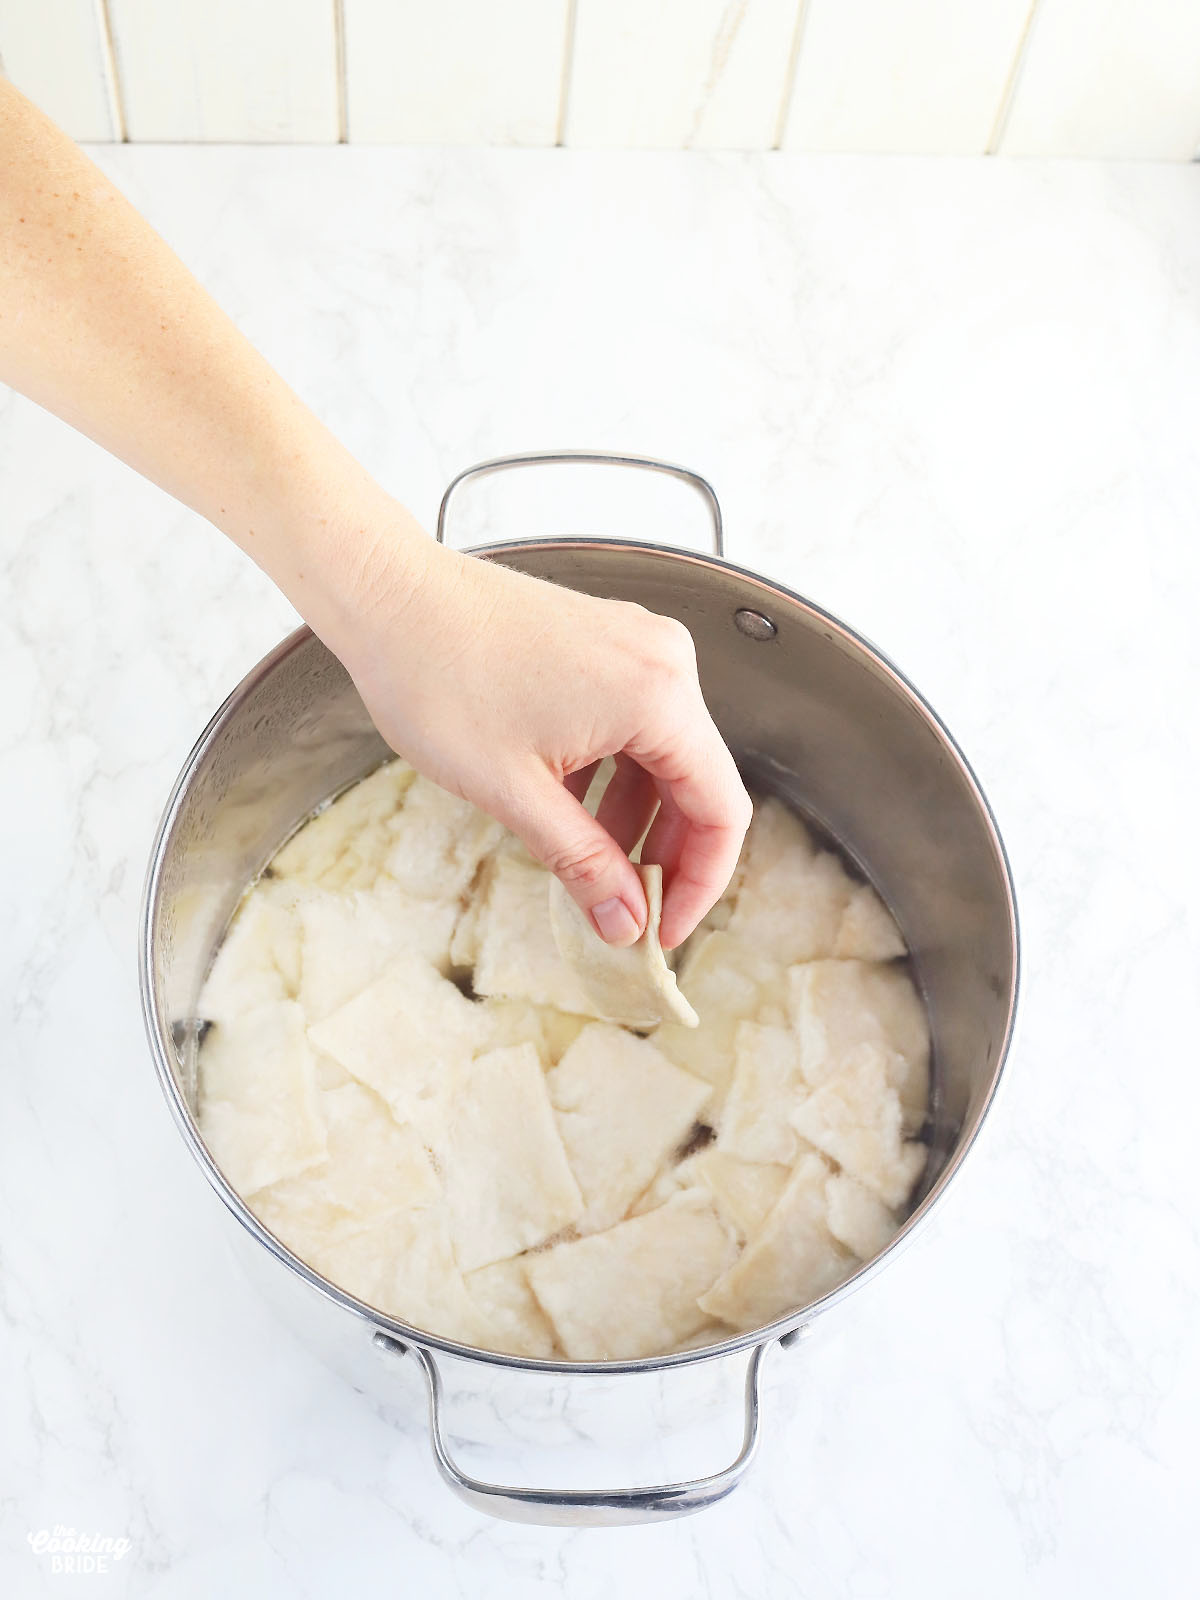 hand dropping a dumpling into a stock pot full of dumplings